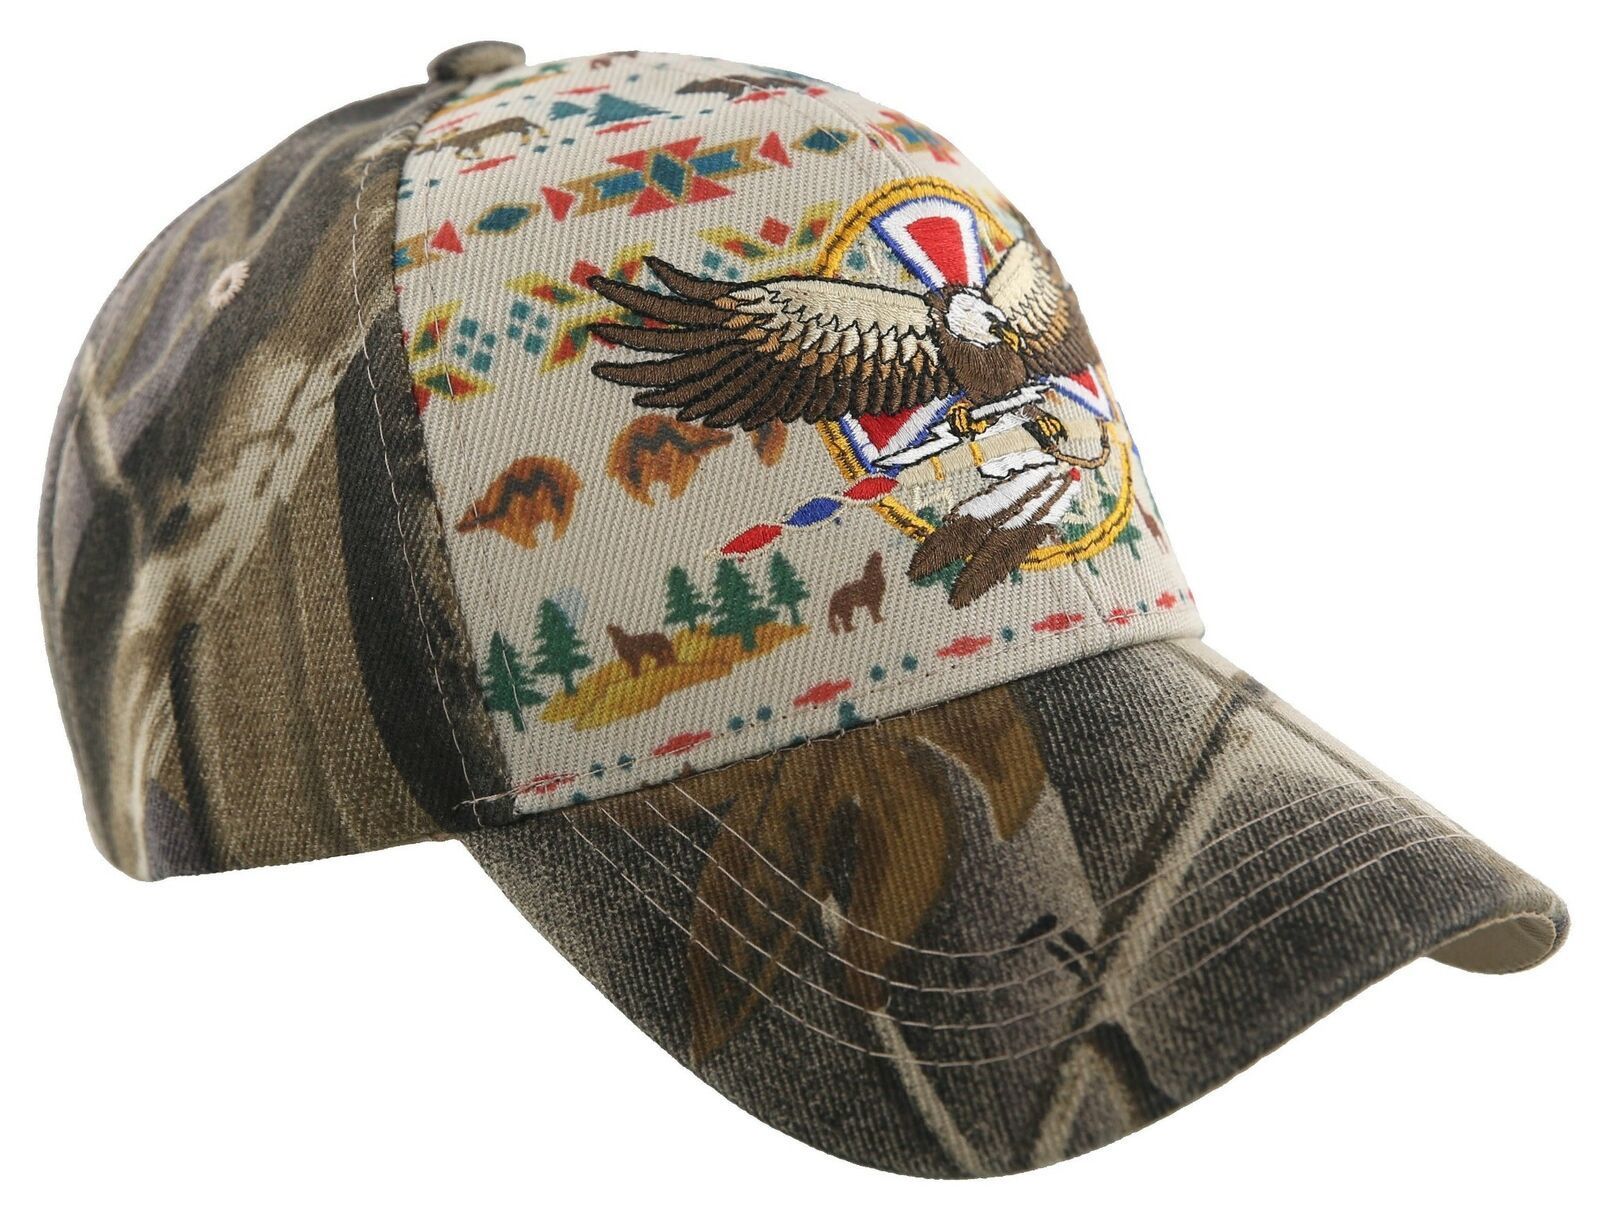 NEW! NATIVE PRIDE INDIAN AMERICAN EAGLE DESIGN CAP HAT CAMO - Men's Hats